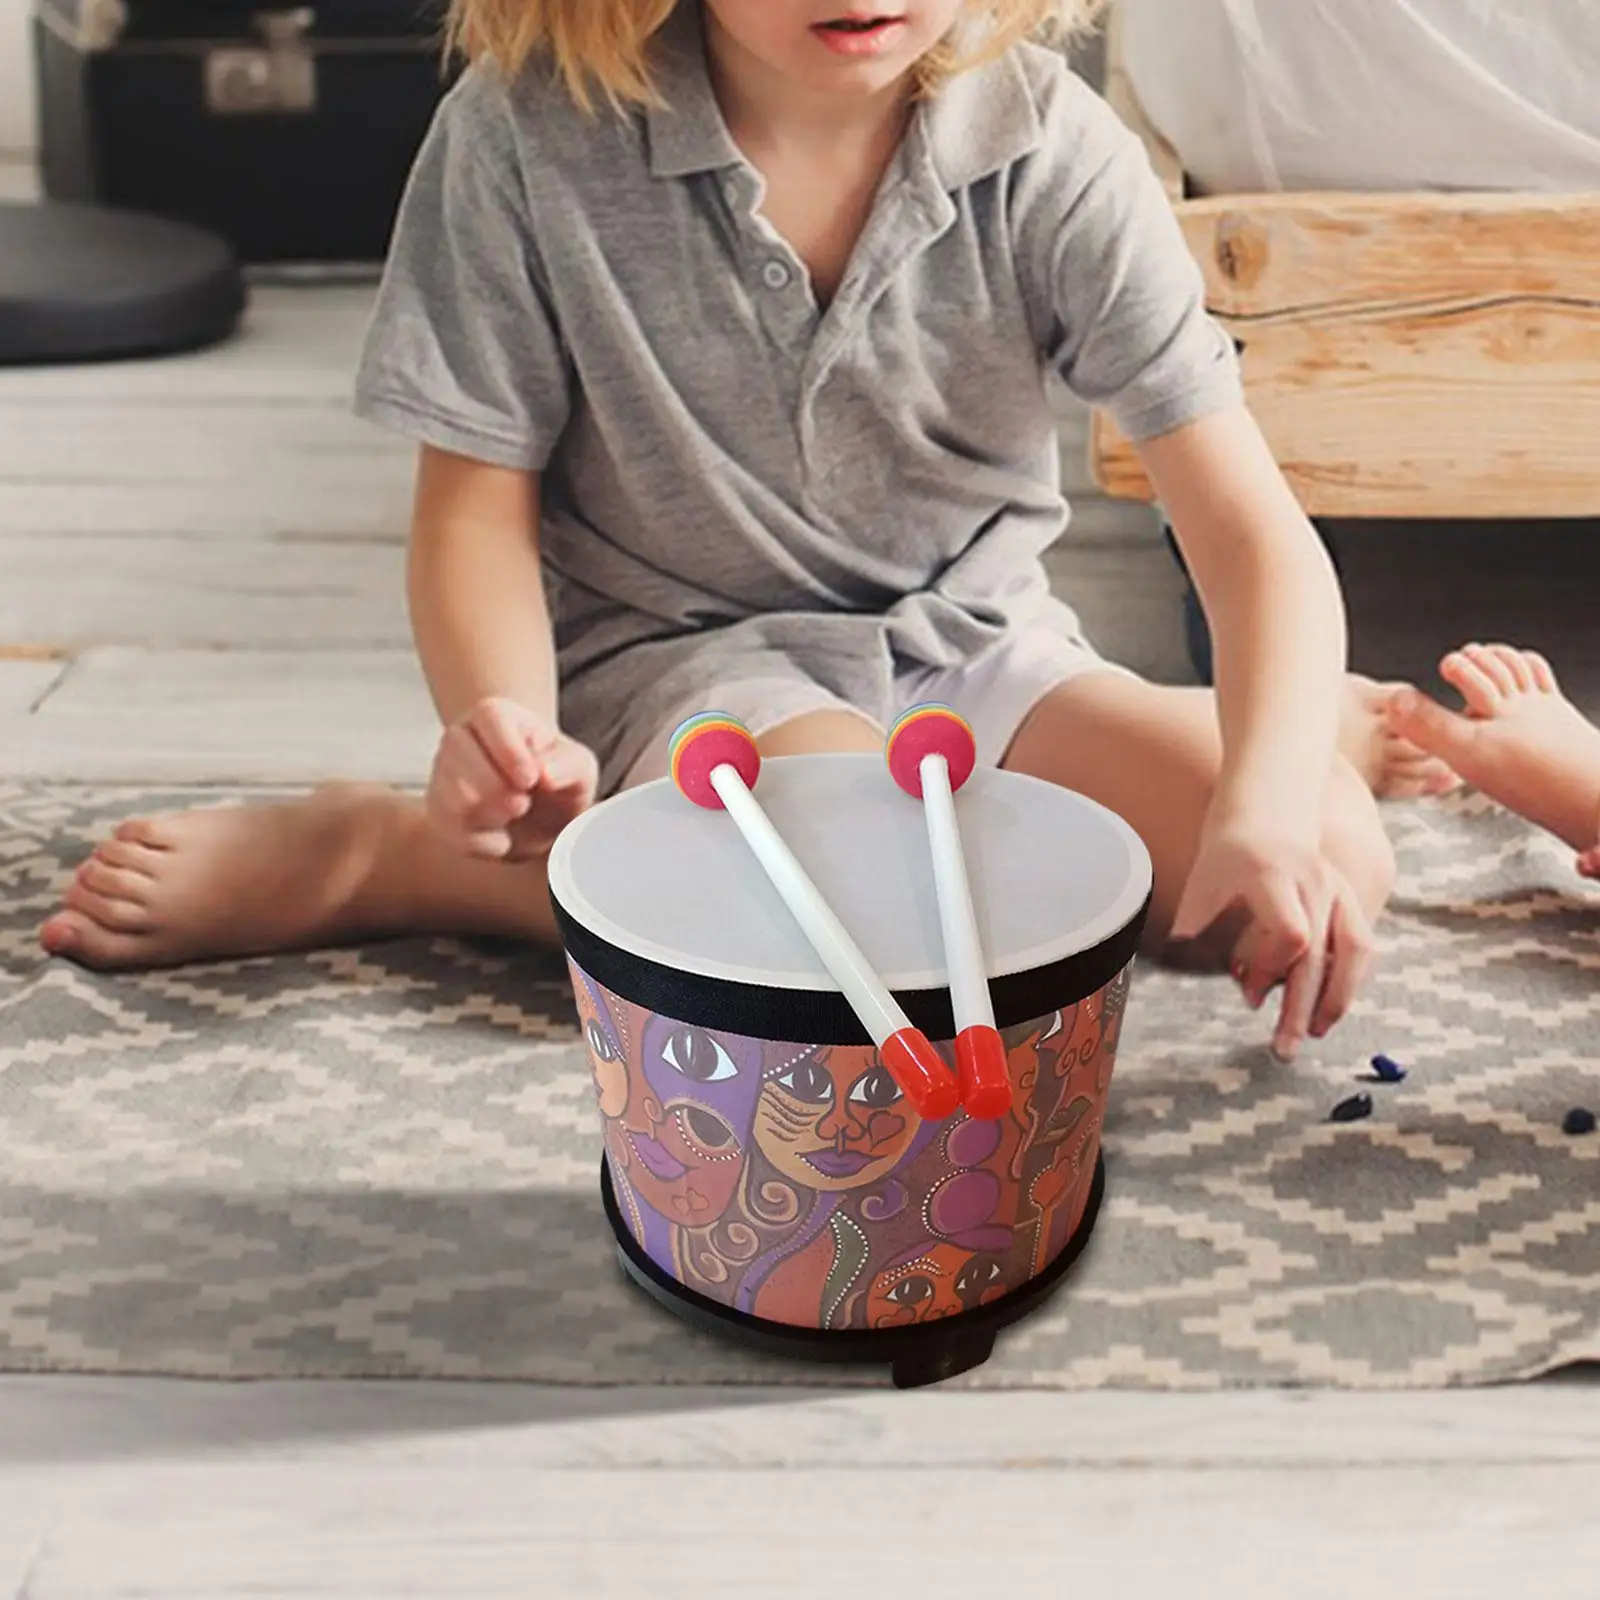 Floor Tom Drum for Kids Montessori Preschool Toys Percussion Educational Ground Drum for Children Baby Kids Birthday Gift